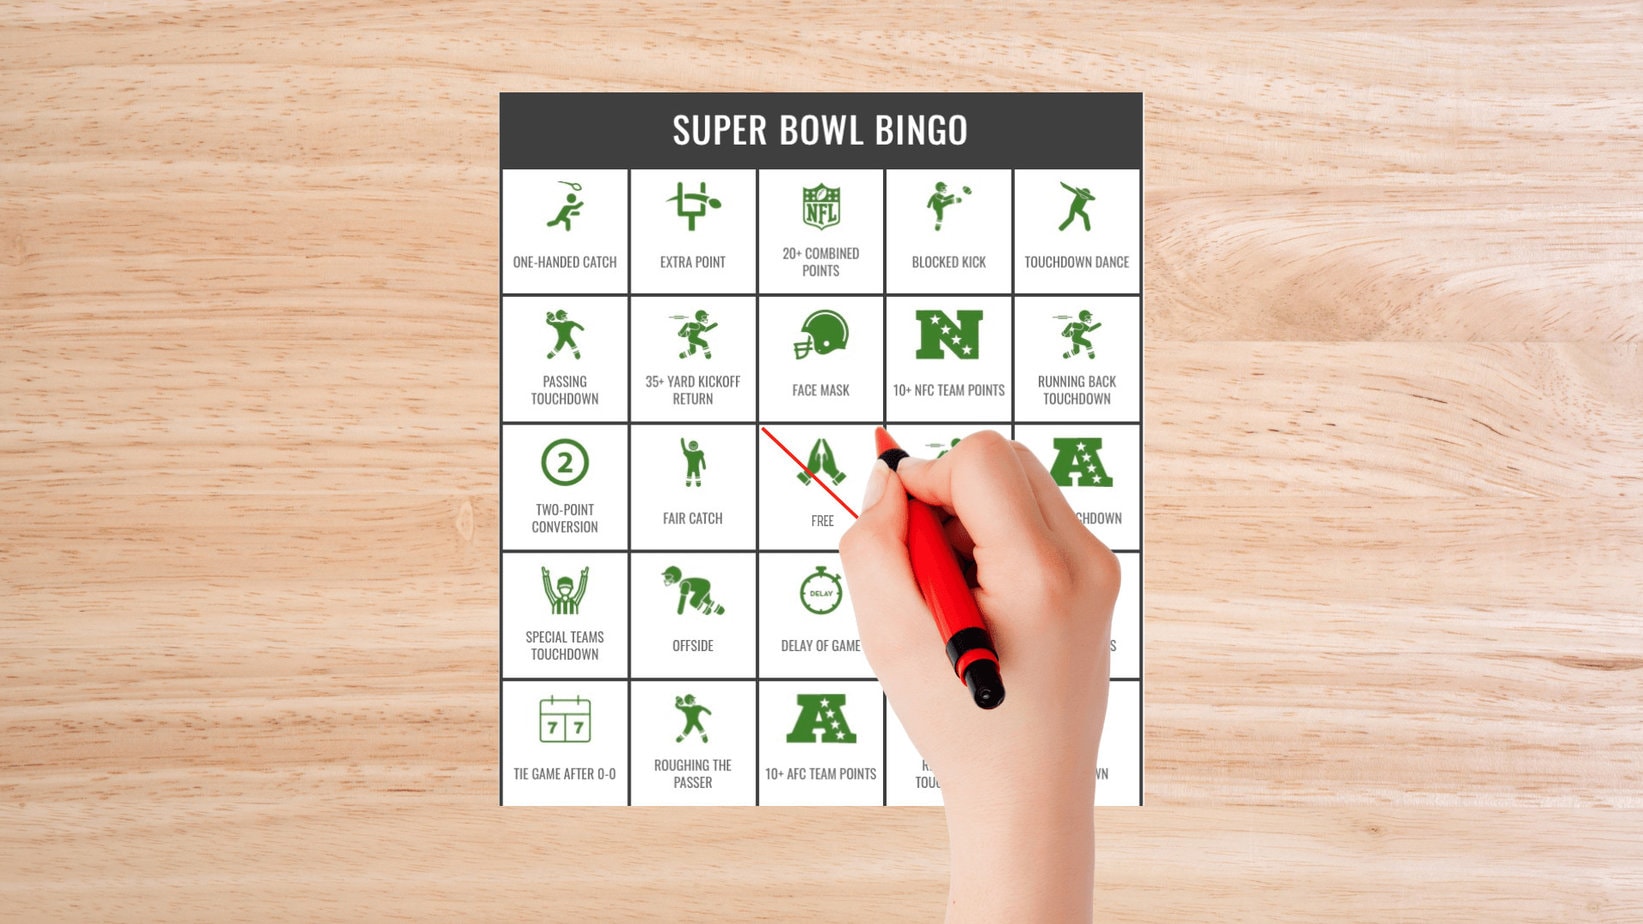 super-bowl-bingo-game-rules-how-to-play-super-bowl-bingo